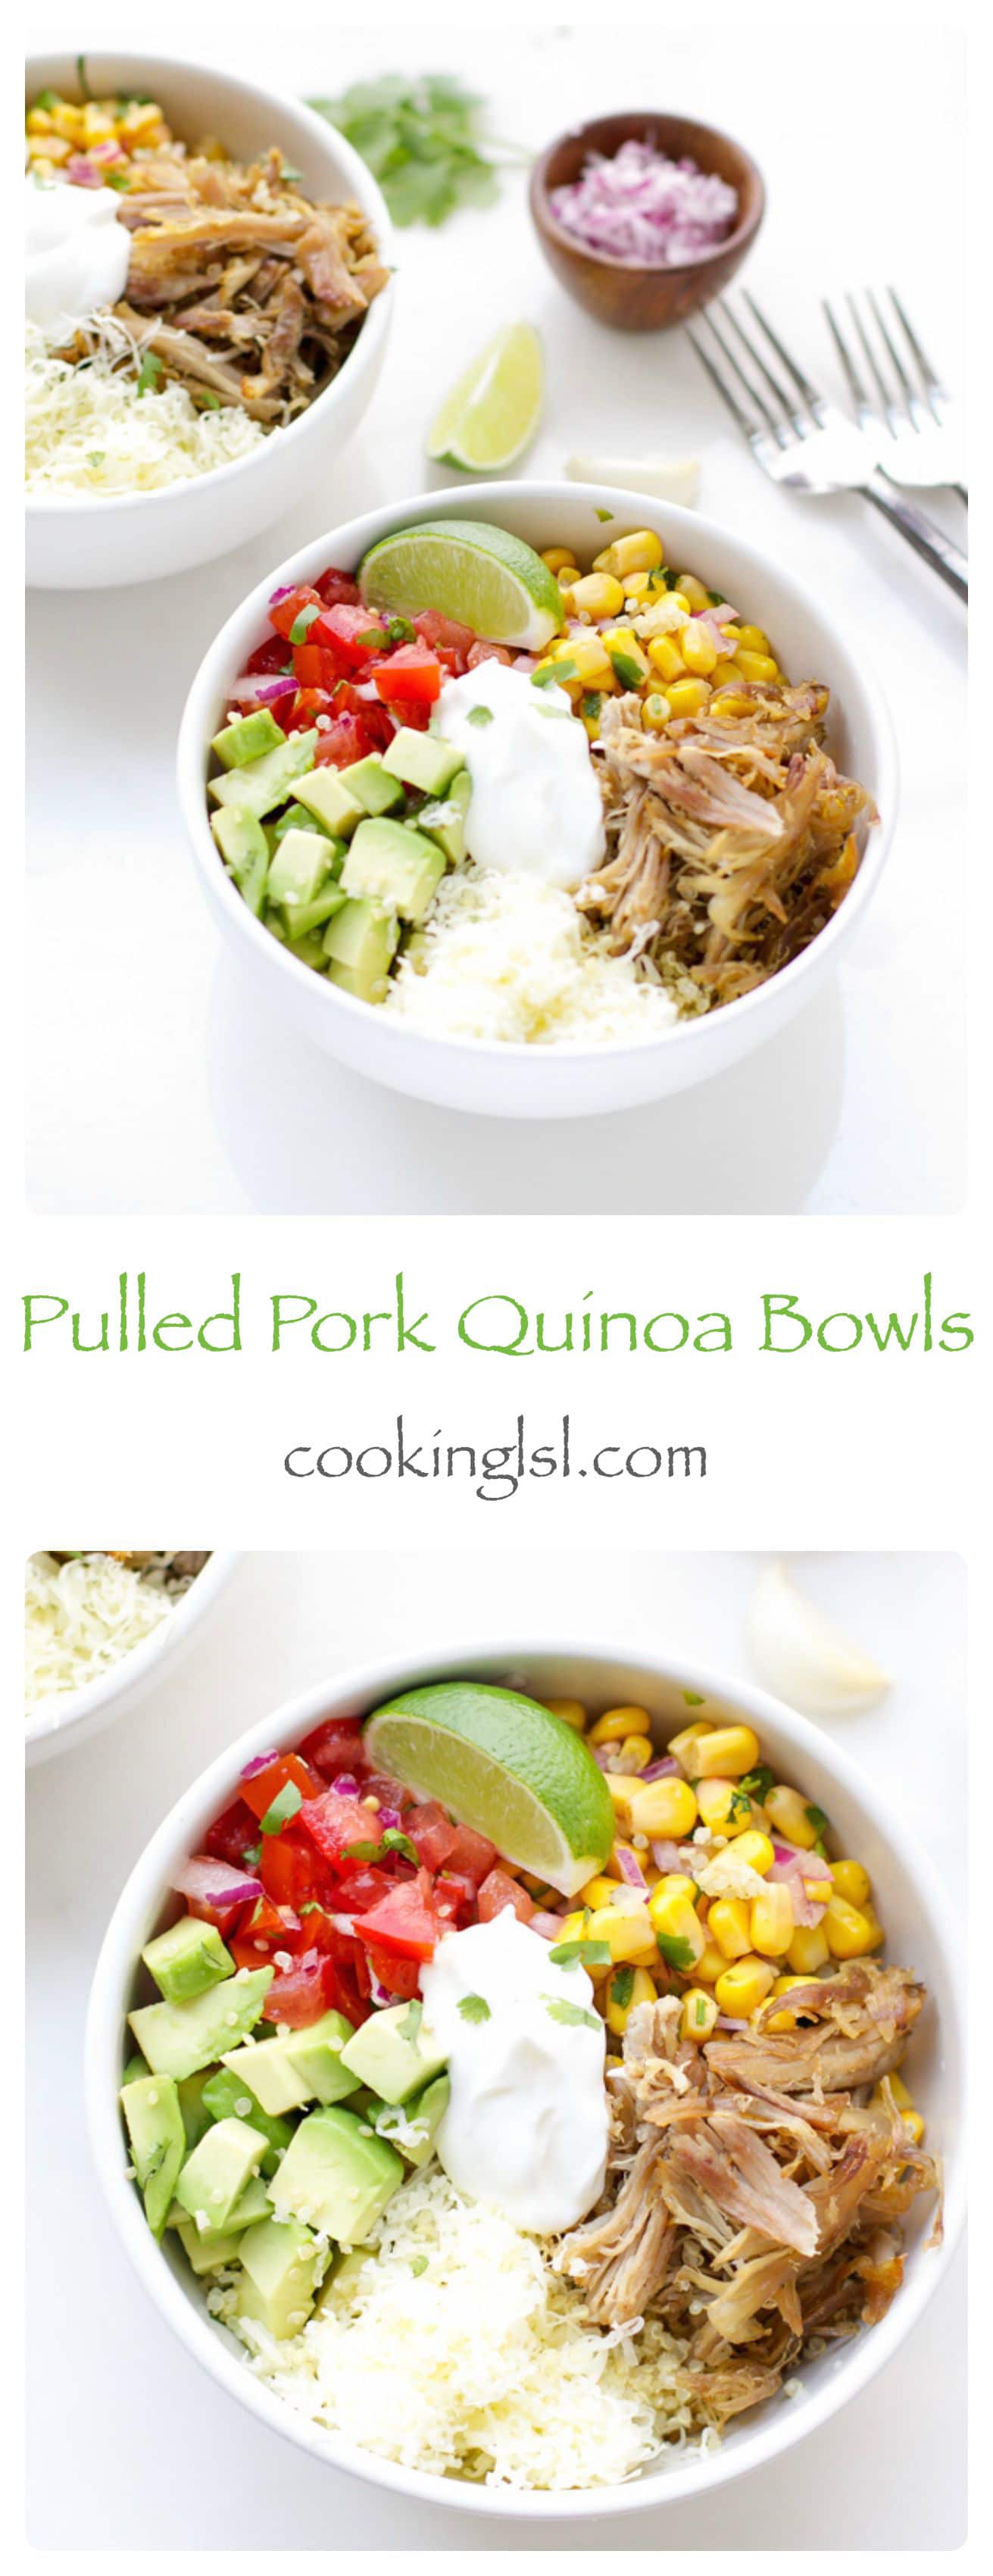 easy-dinner-ideas-pulled-pork-quinoa-bowls-carnitas-Mexican